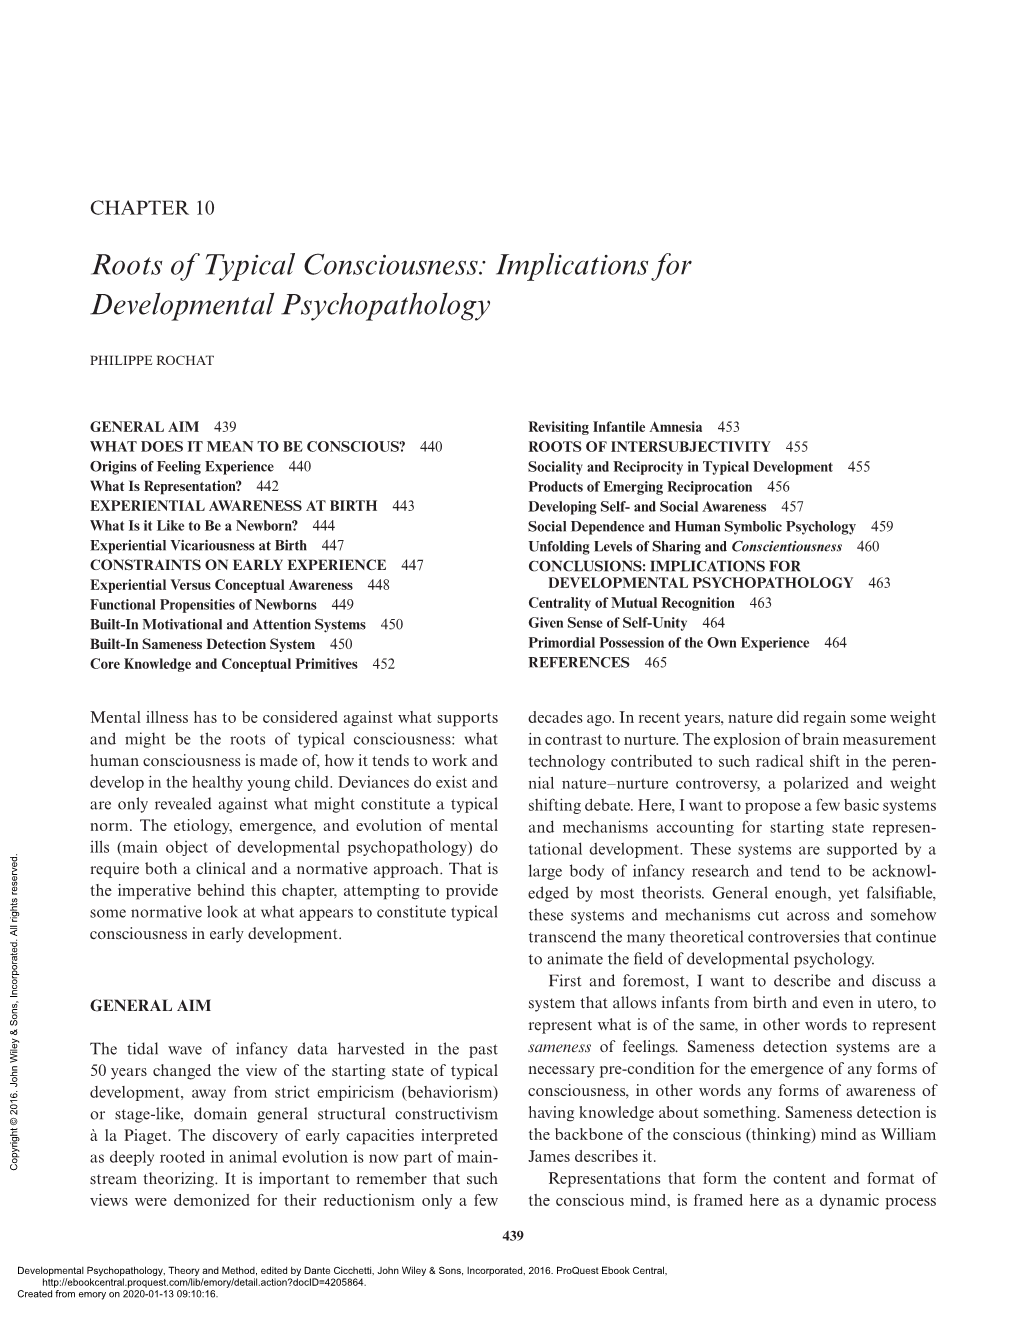 Implications for Developmental Psychopathology